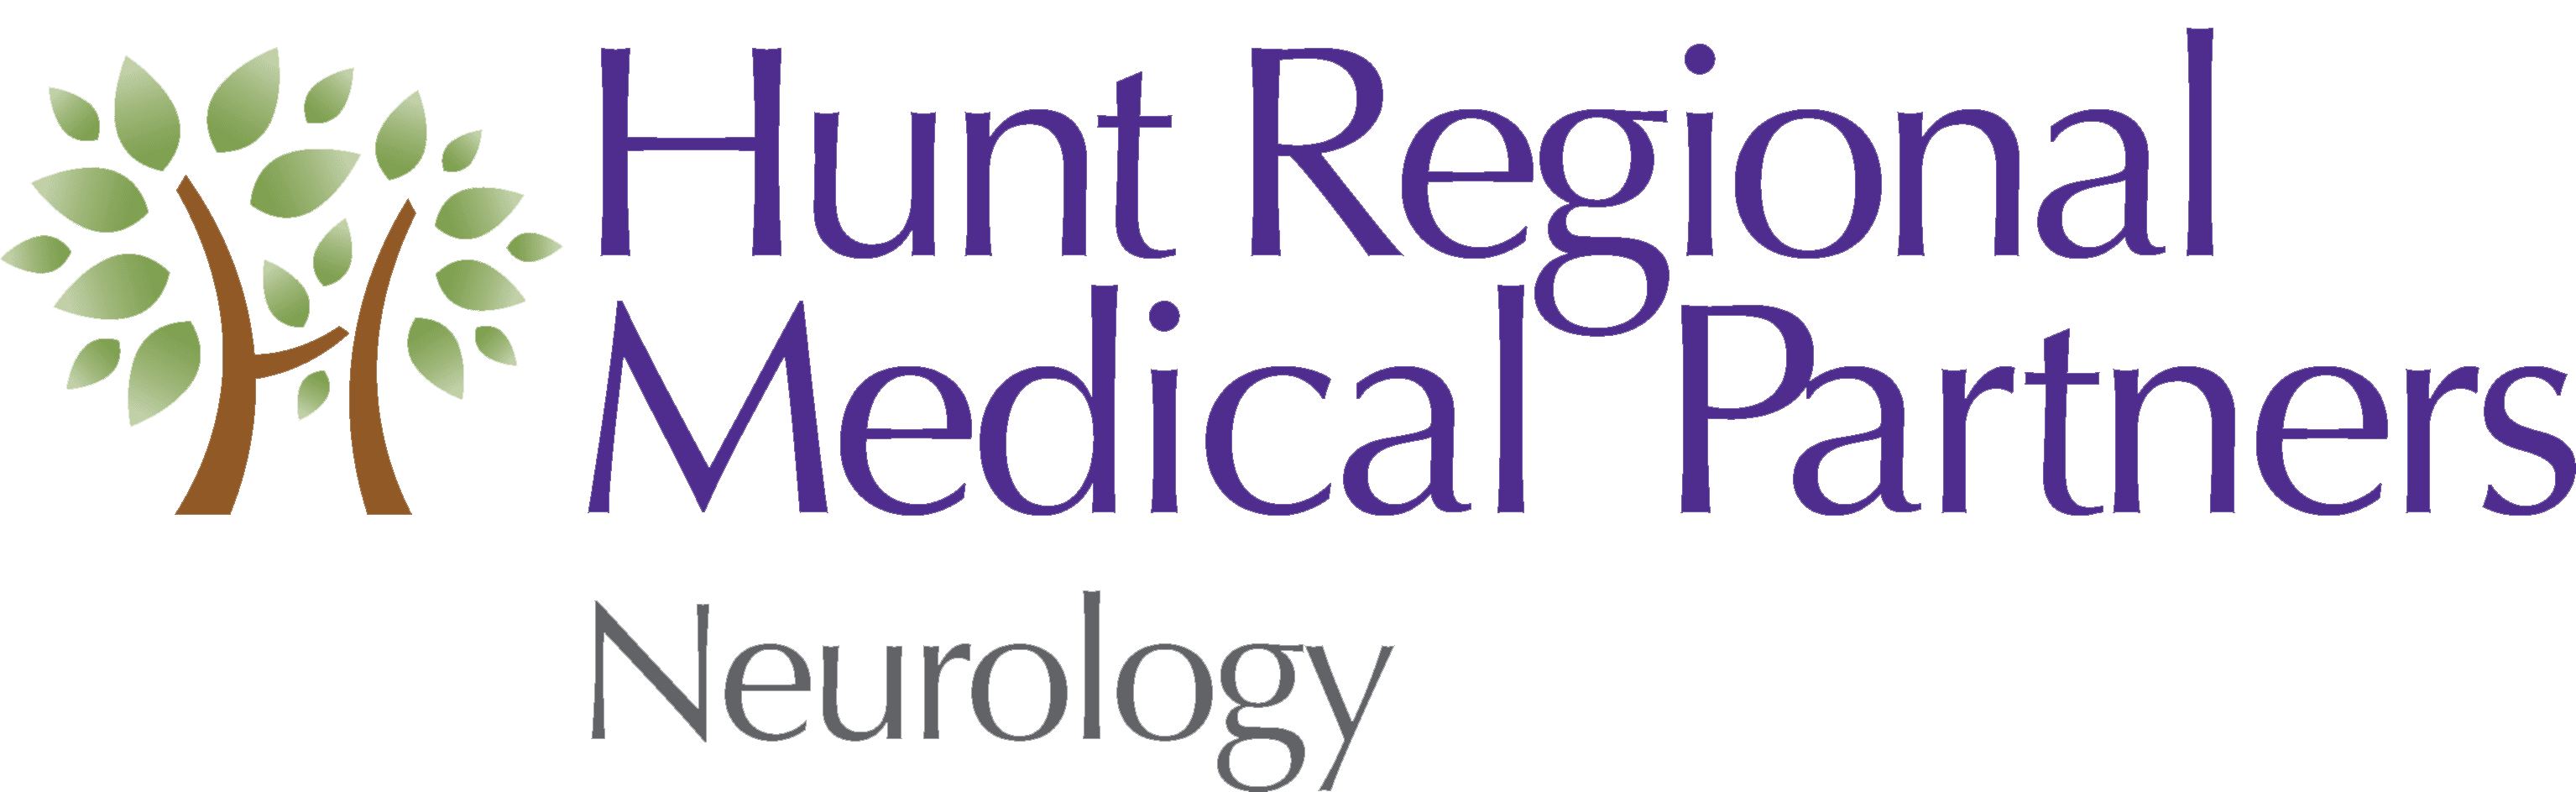 Hunt Regional Medical Partners | Neurology